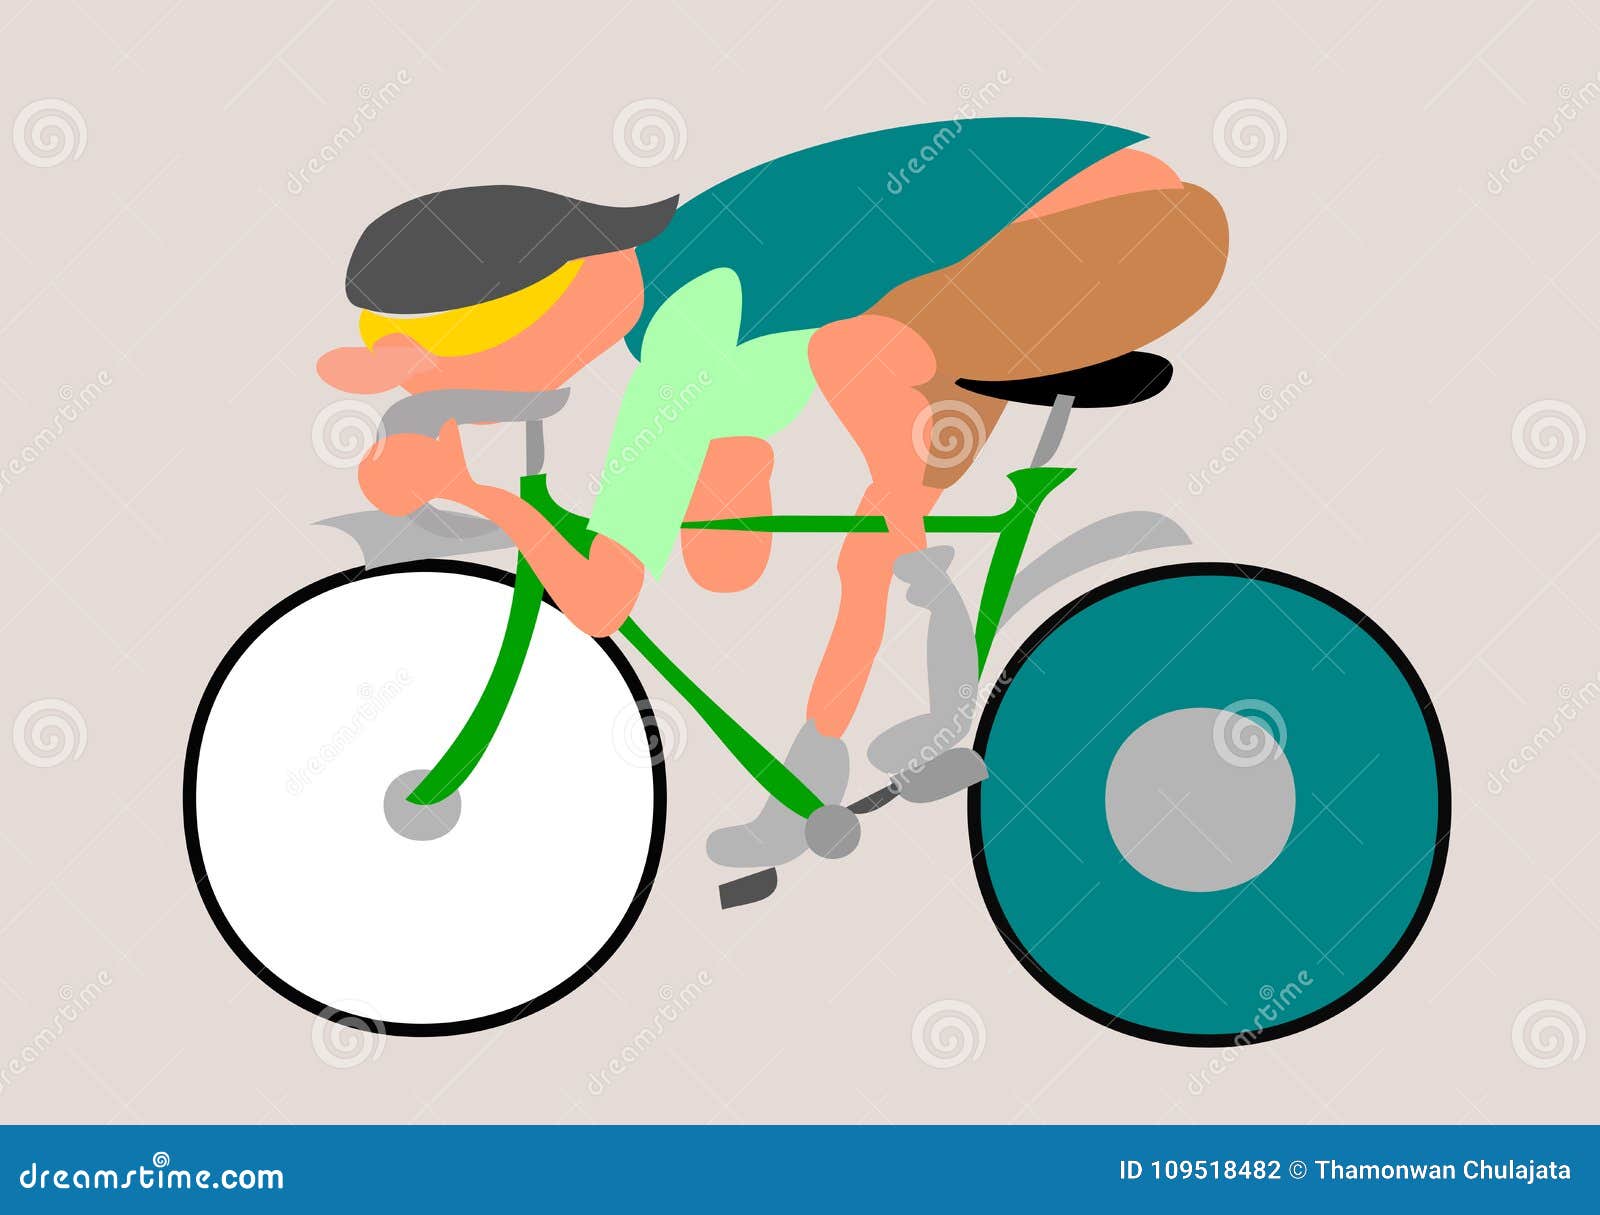 Cartoon racing bike stock vector. Illustration of race - 109518482